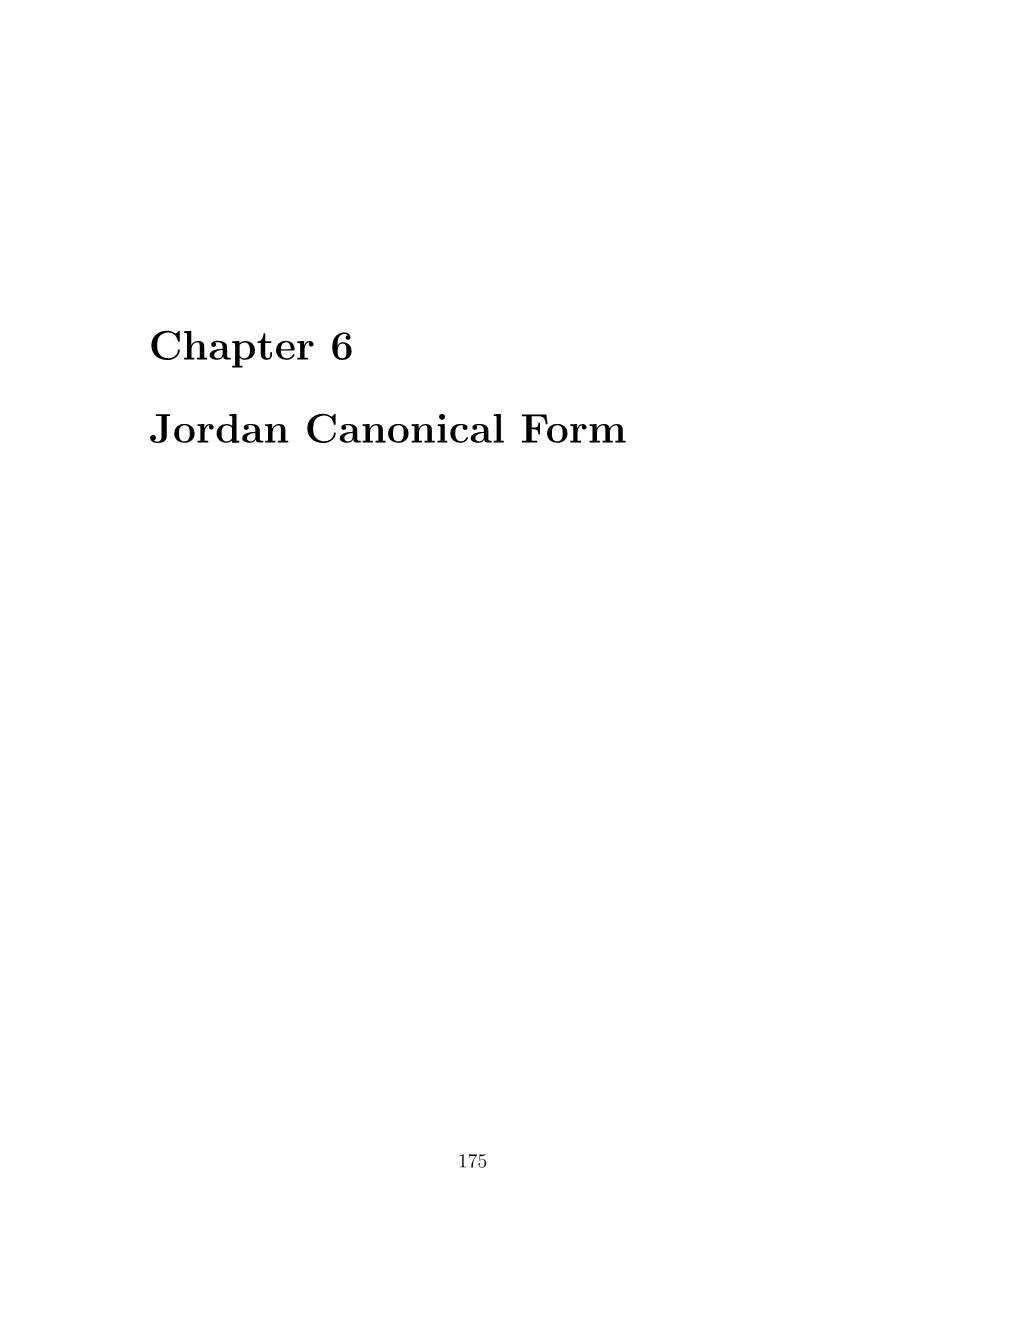 Chapter 6 Jordan Canonical Form